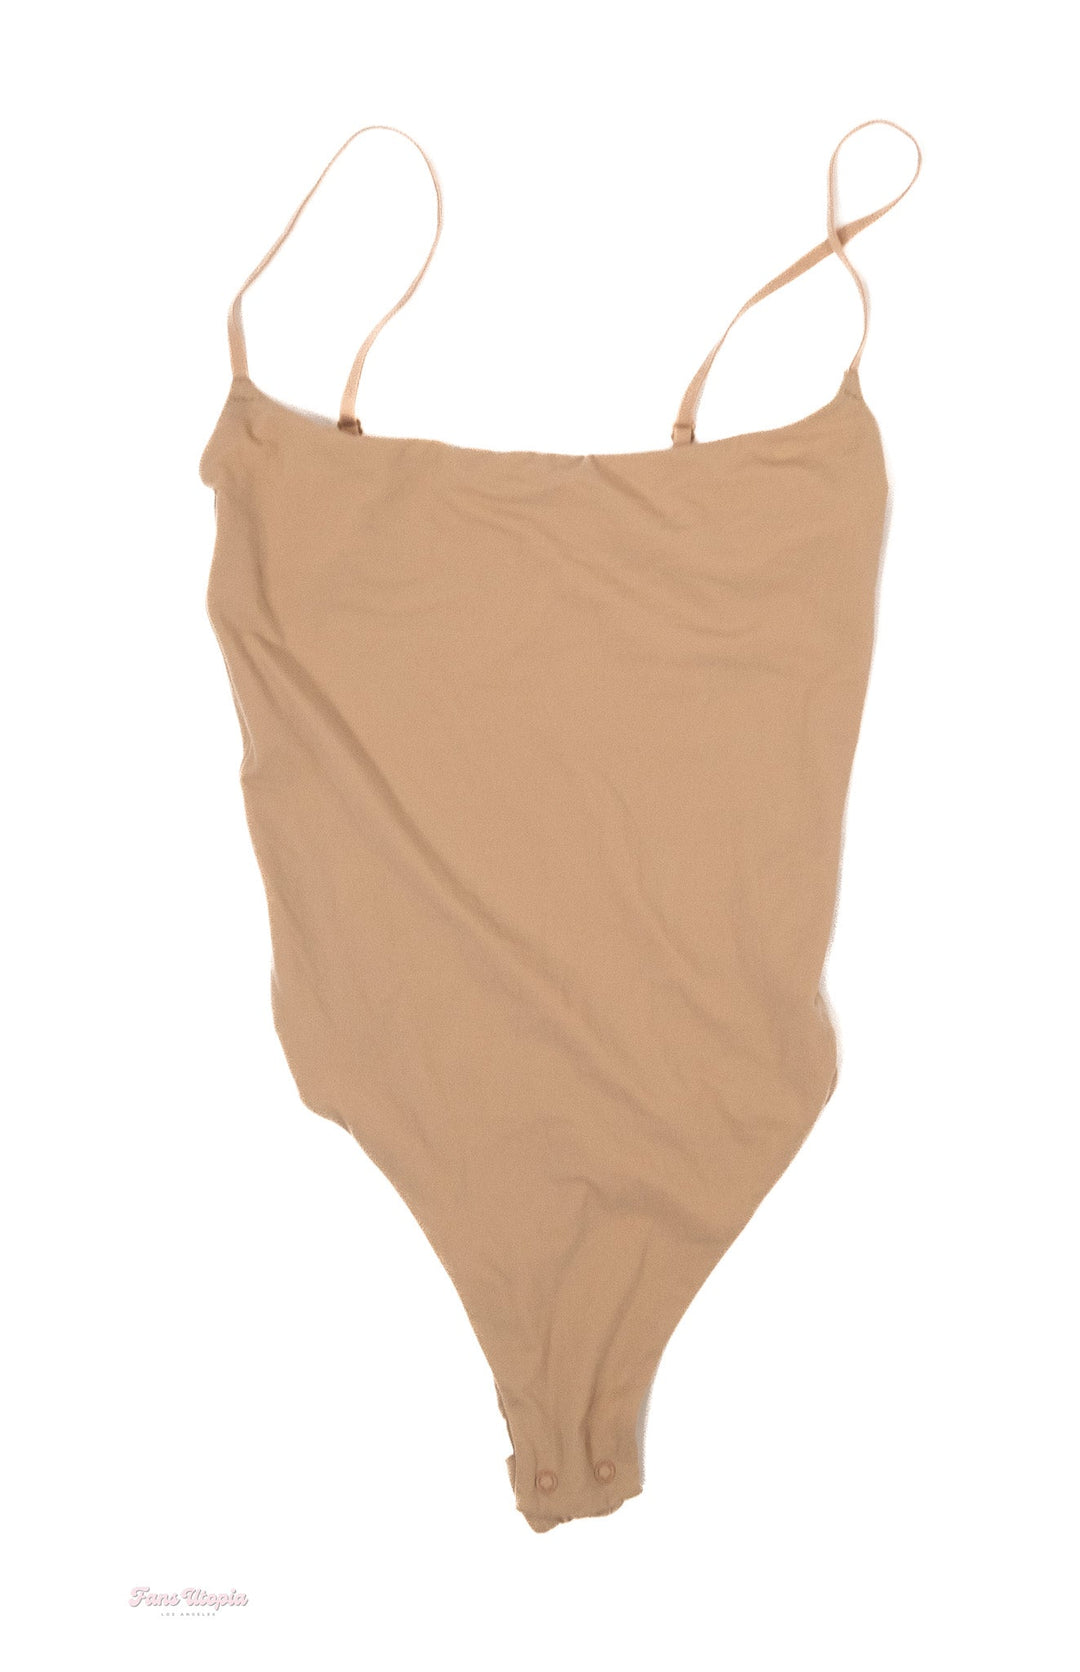 Riley Reid Skinny Strap Nude Bodysuit